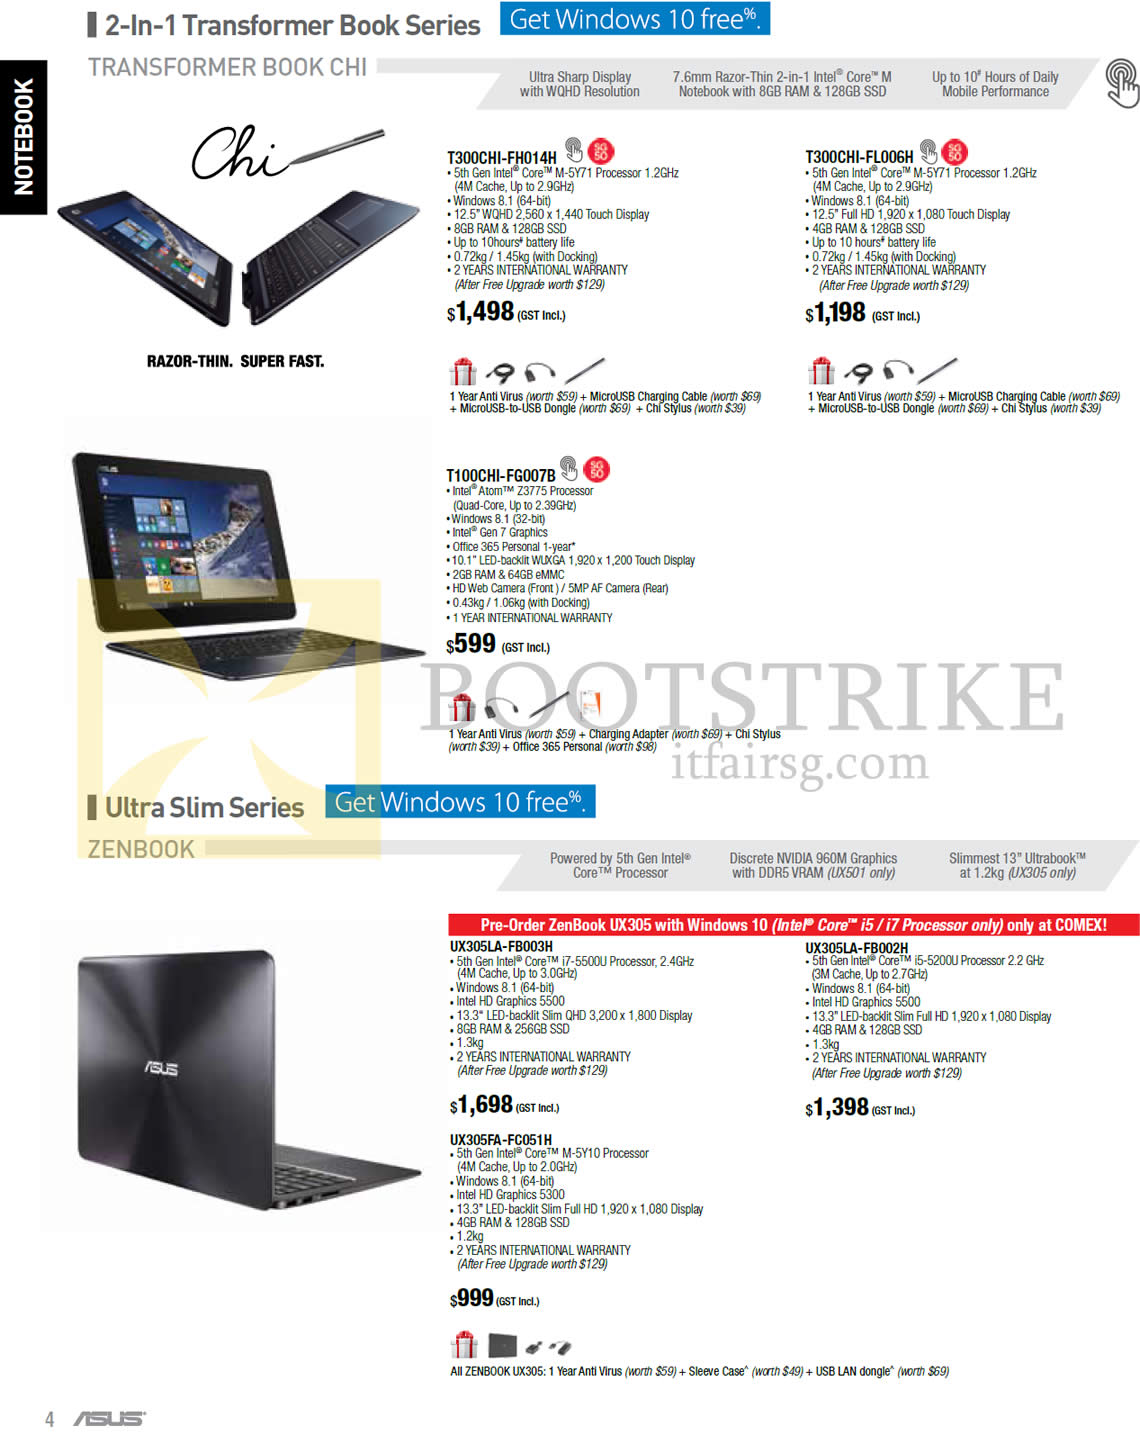 COMEX 2015 price list image brochure of ASUS Notebooks, 2-In-1 Transformer Book Series, Zenbook, Chi T300CHI-FH014H, T300CHI-FL006H, T100CHI-FG007B, UX305LA-FB003H, UX305LA-FB003H, UX305LA-FB002H, UX305FA-FC051H